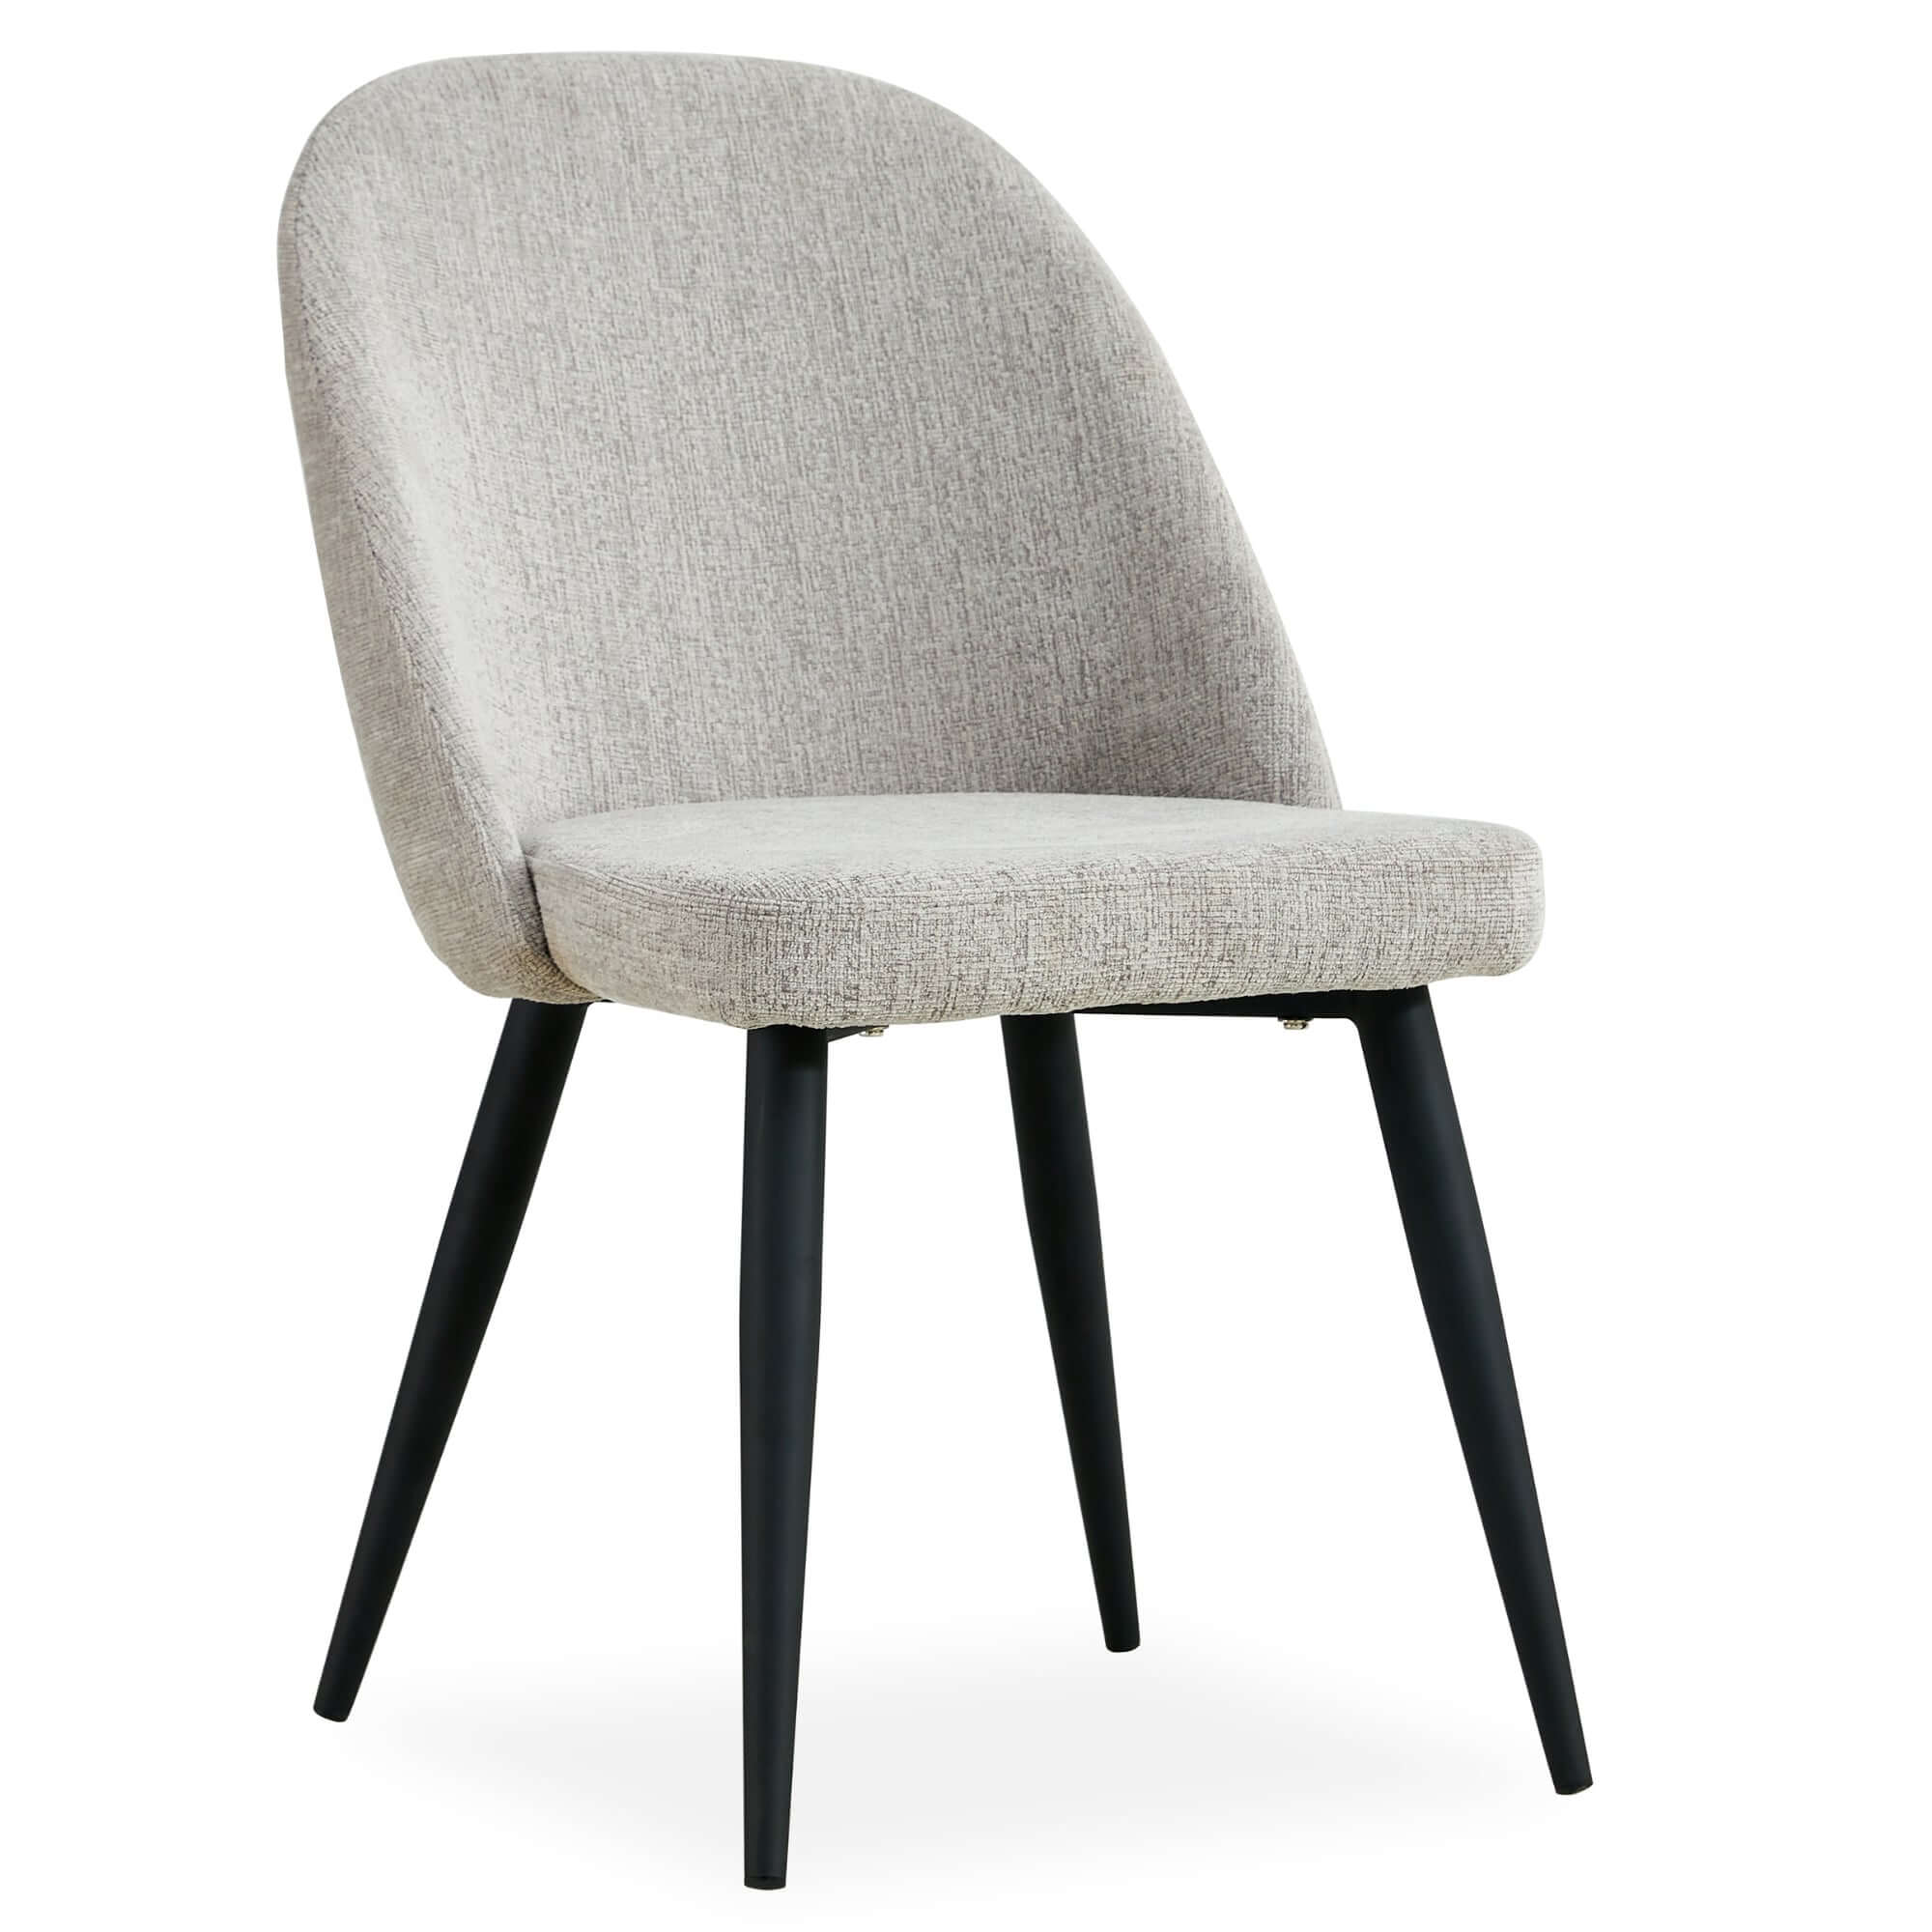 Erin 6-Piece Dining Chair Set - Quartz Fabric-Upinteriors